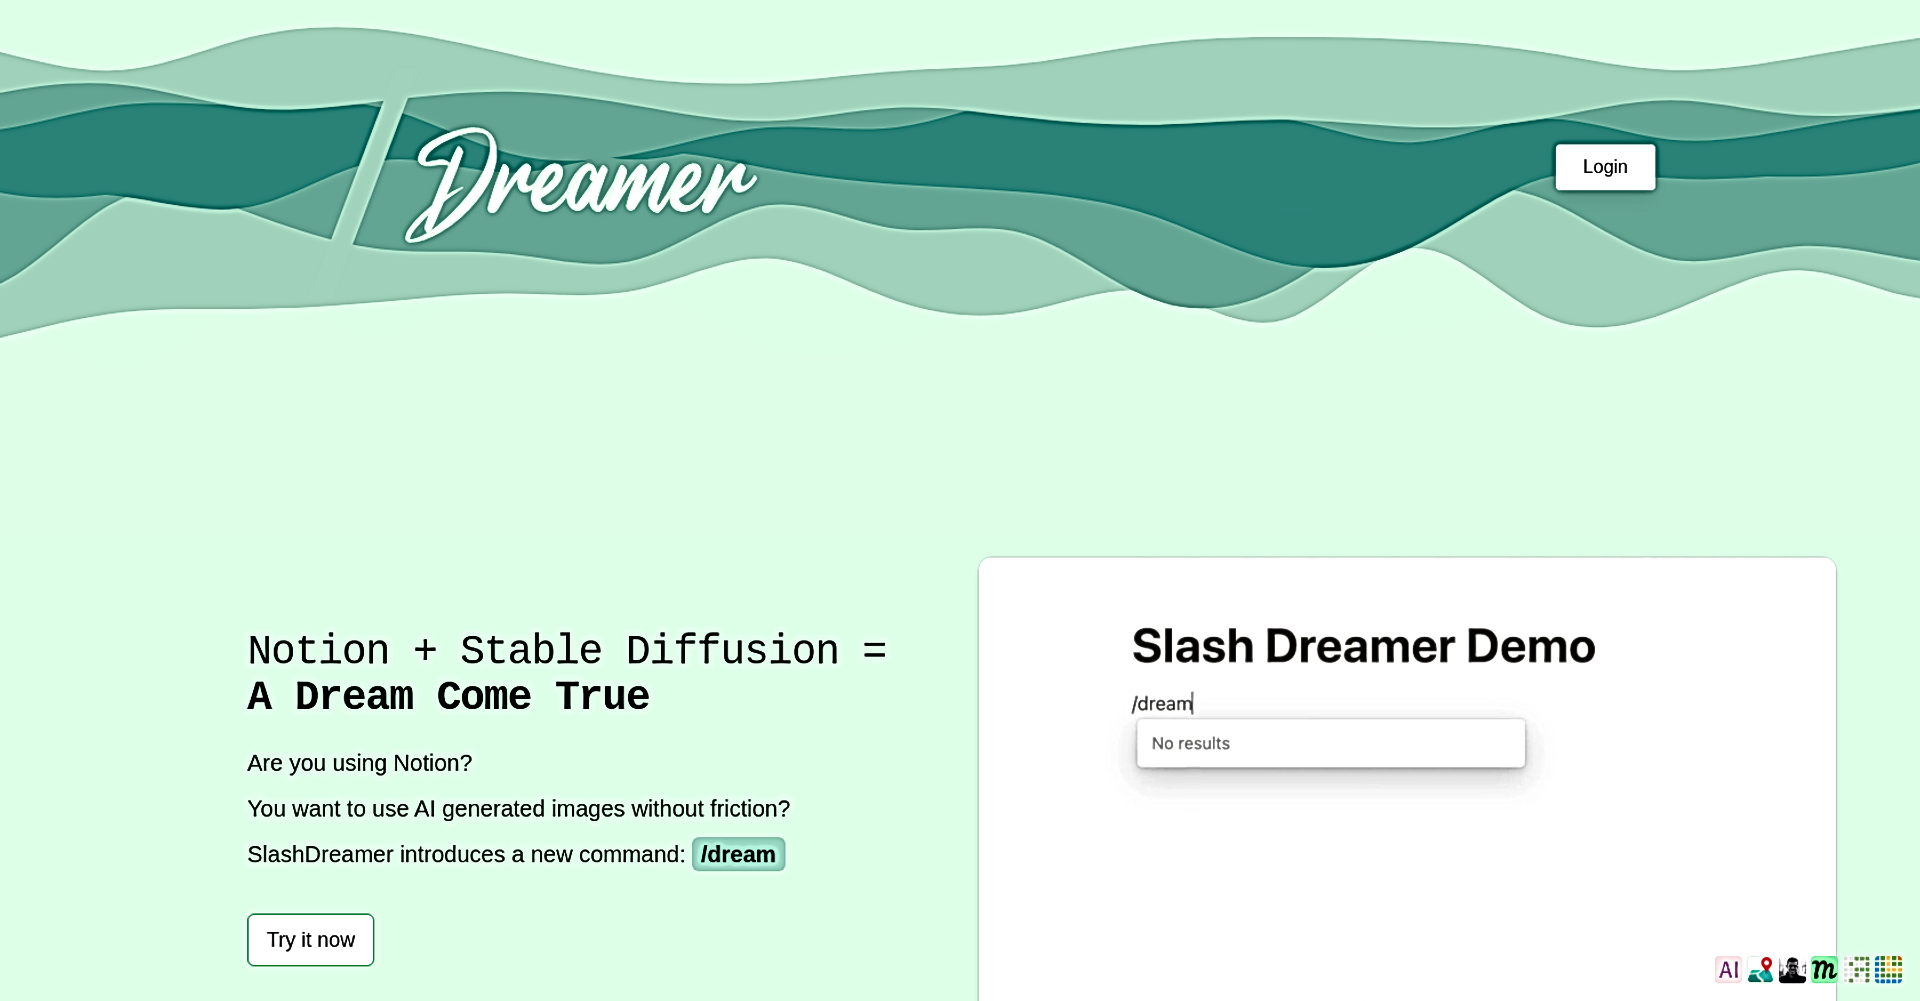 Dreamer featured